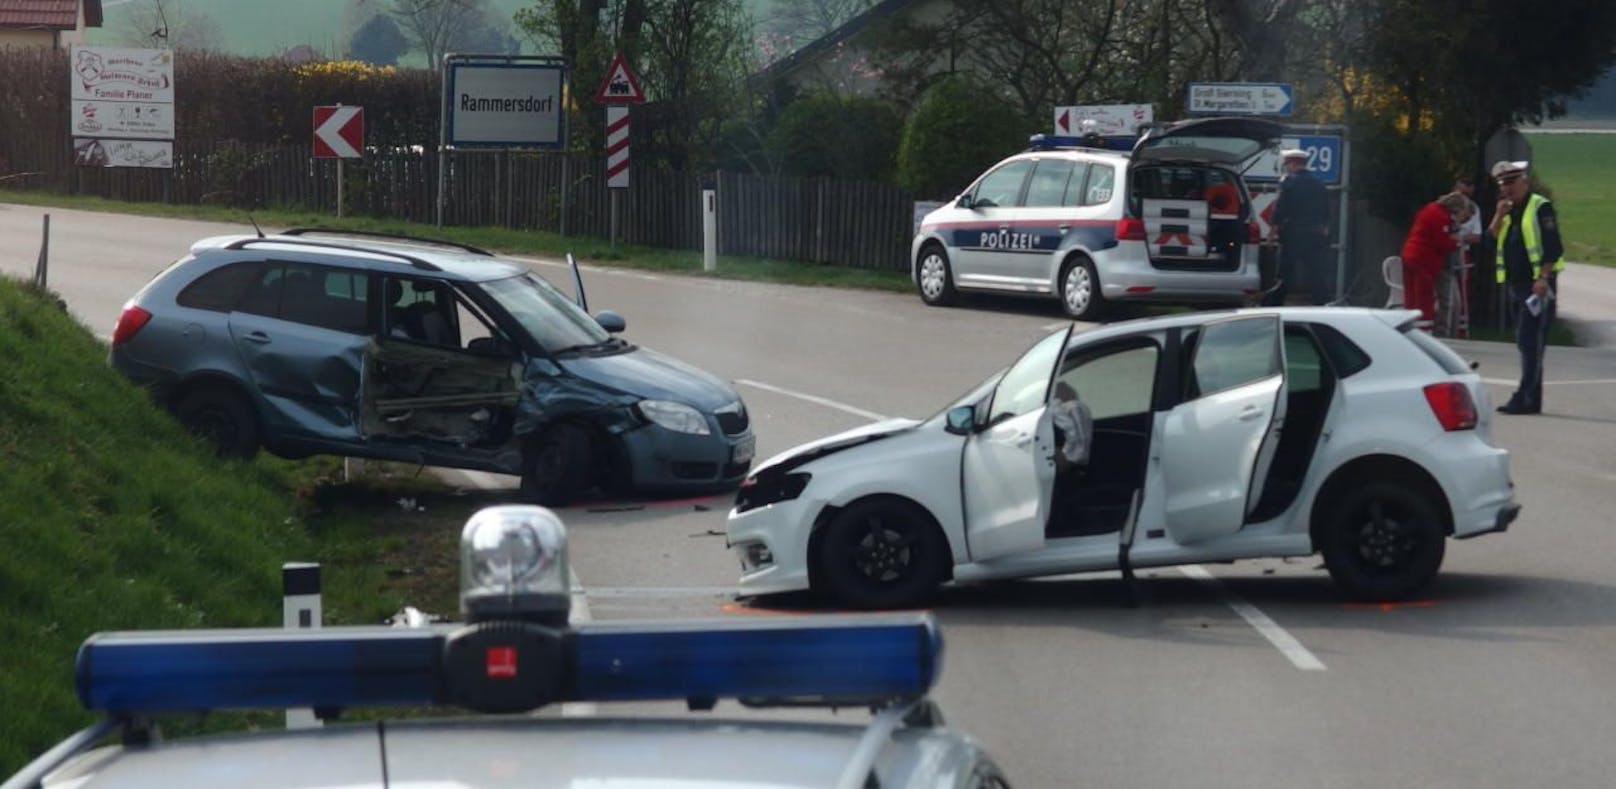 Unfall in Rammersdorf: 83-Jährige übersah Auto